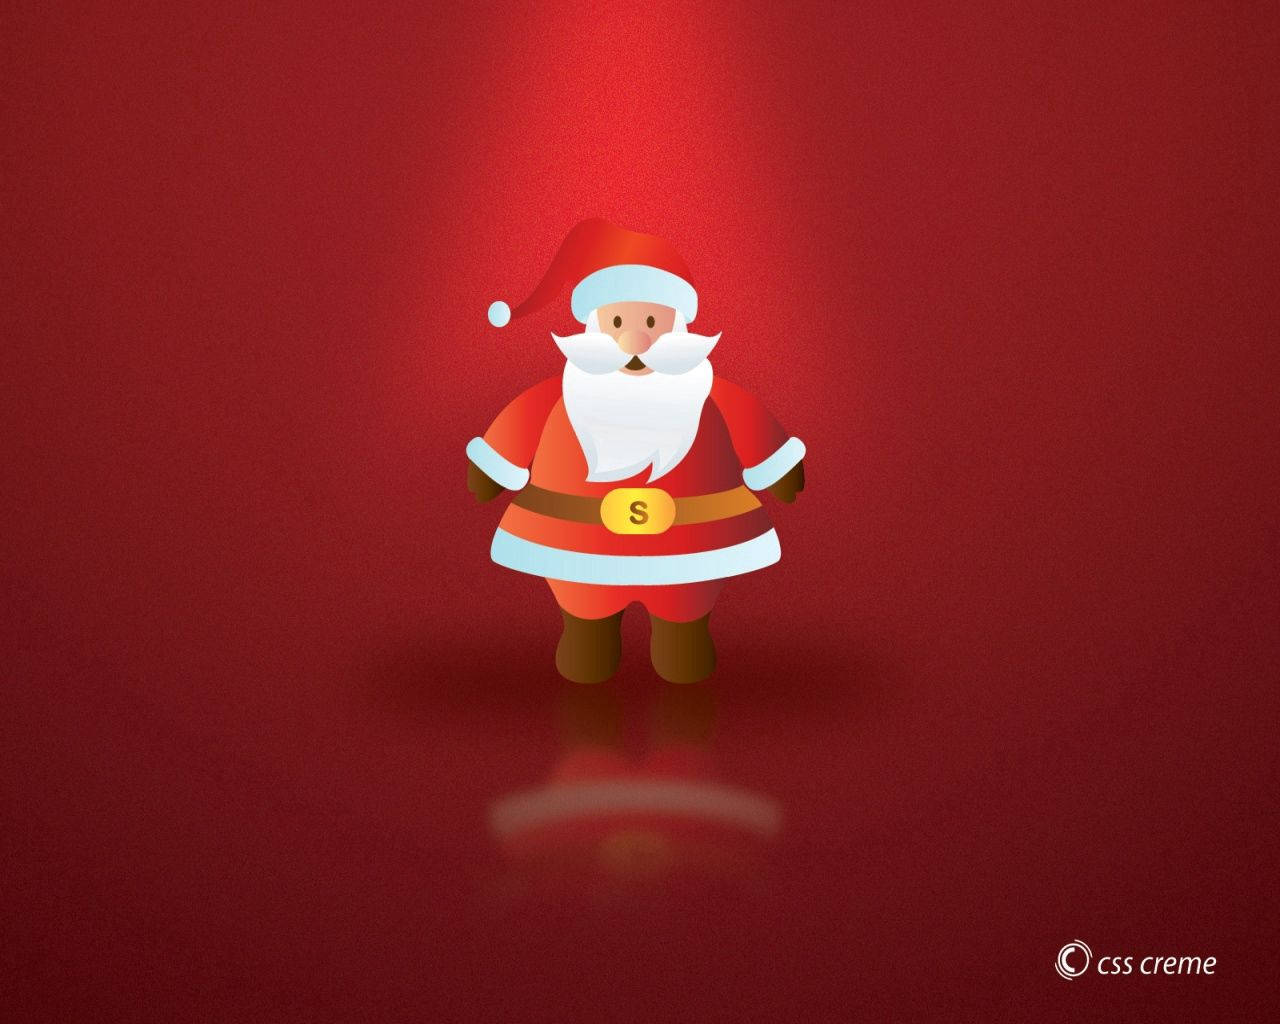 Top 999+ Santa Claus Wallpaper Full HD, 4K✅Free to Use